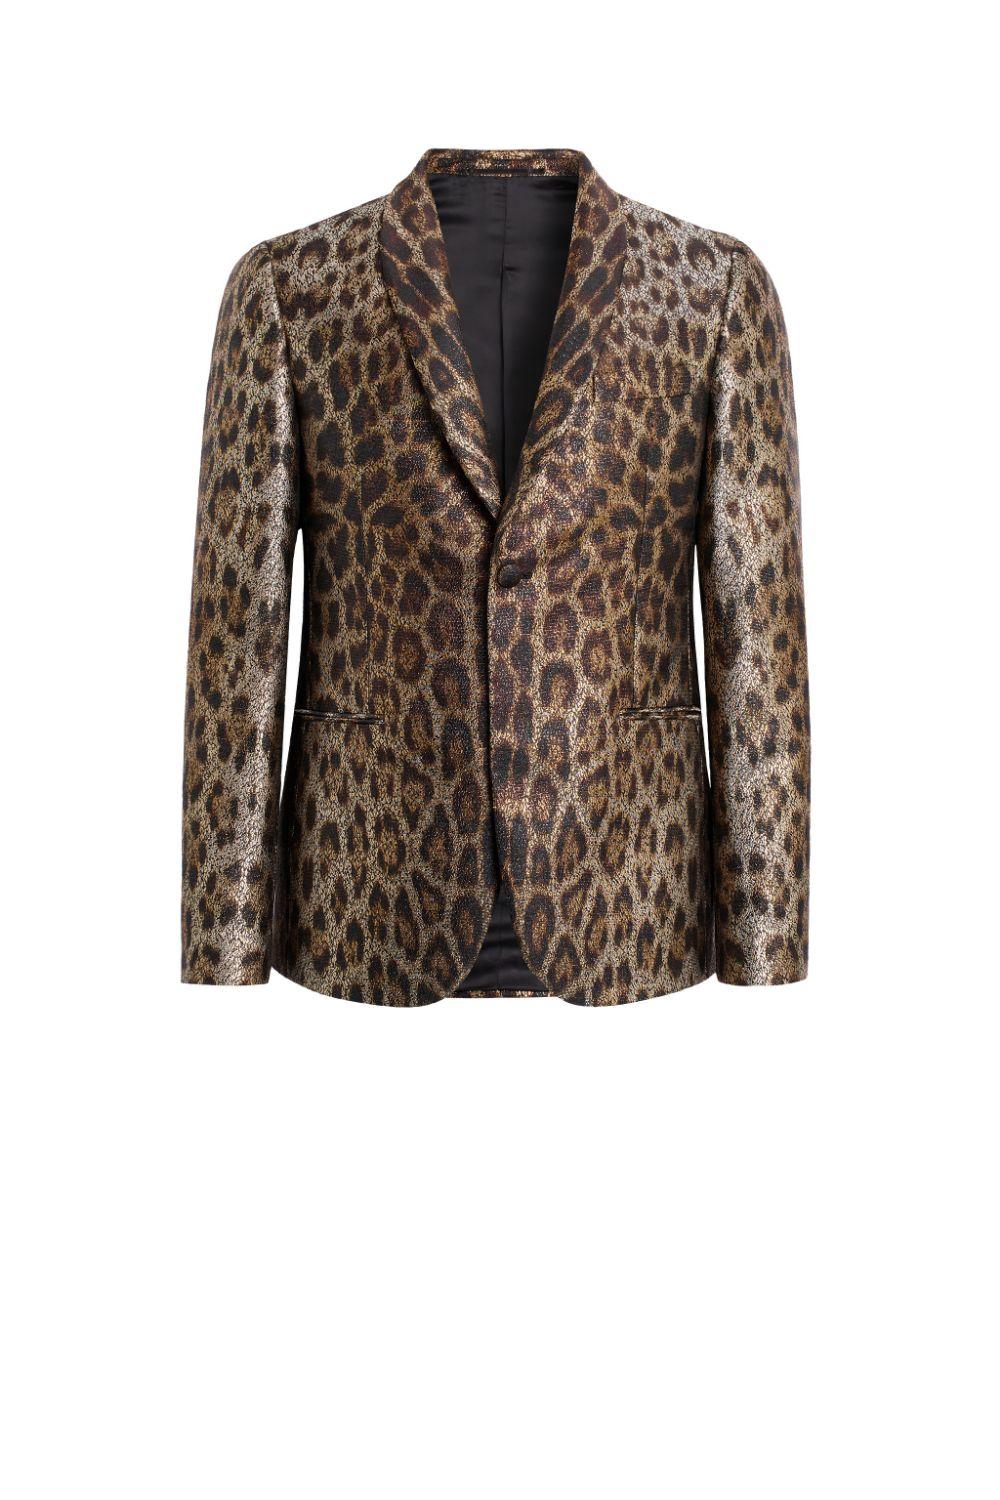 Roberto Cavalli Heritage Jaguar Print Jacket in Brown for Men - Lyst